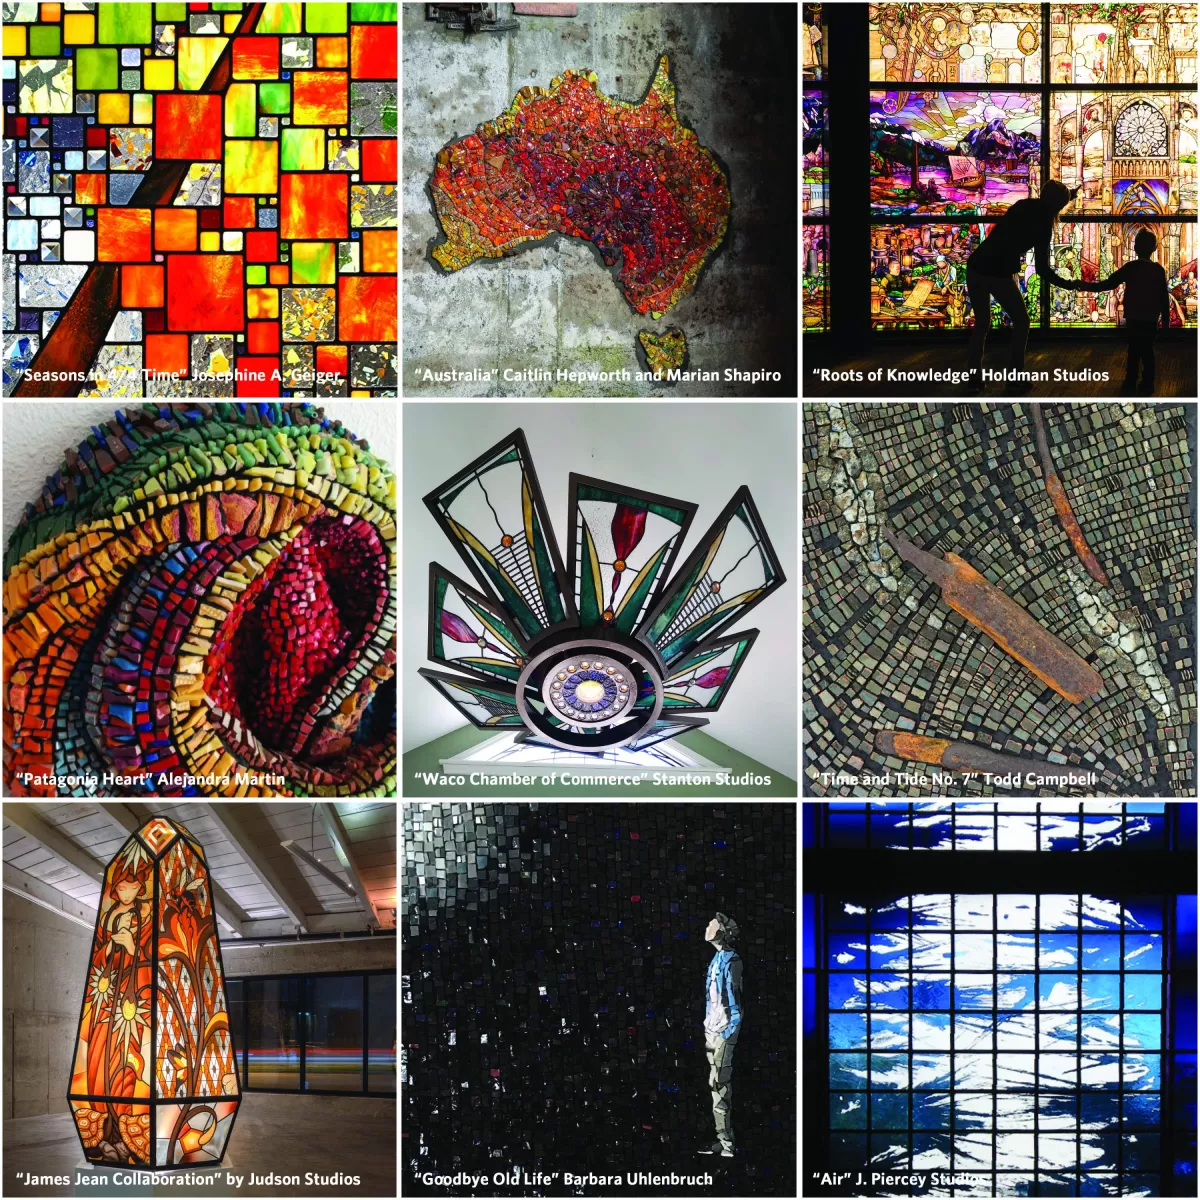 Mosaic Collage